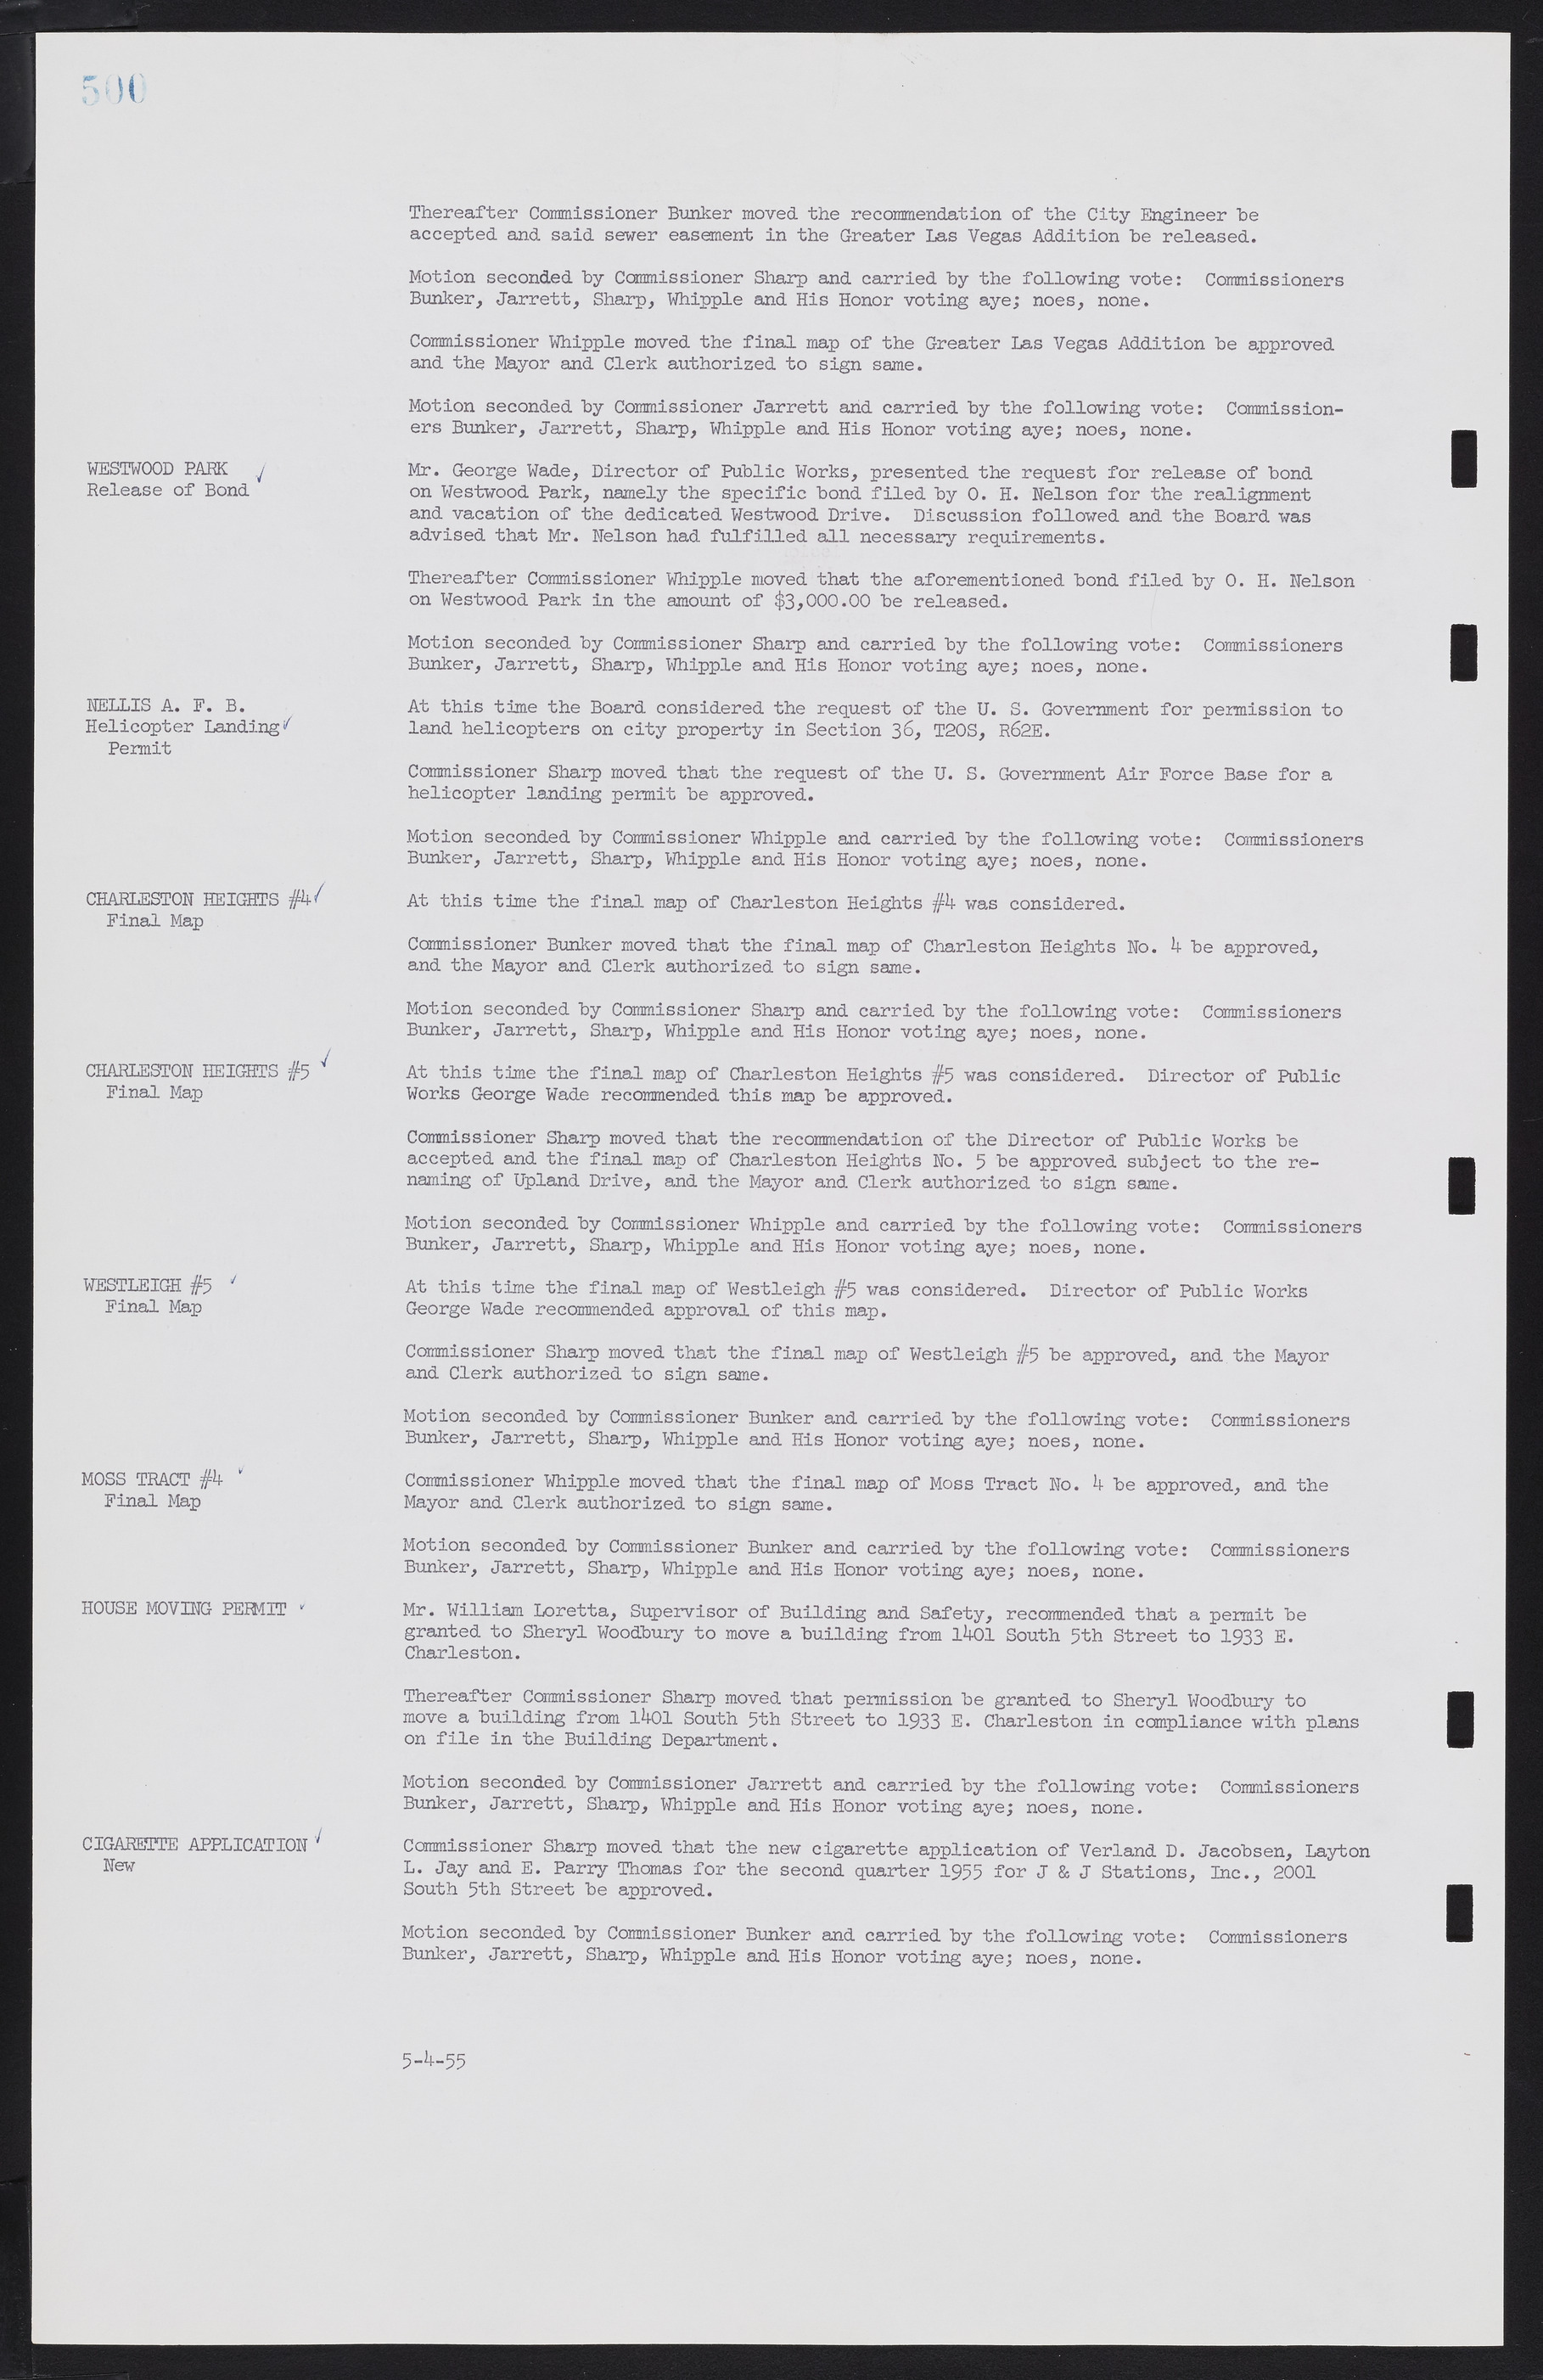 Las Vegas City Commission Minutes, February 17, 1954 to September 21, 1955, lvc000009-506